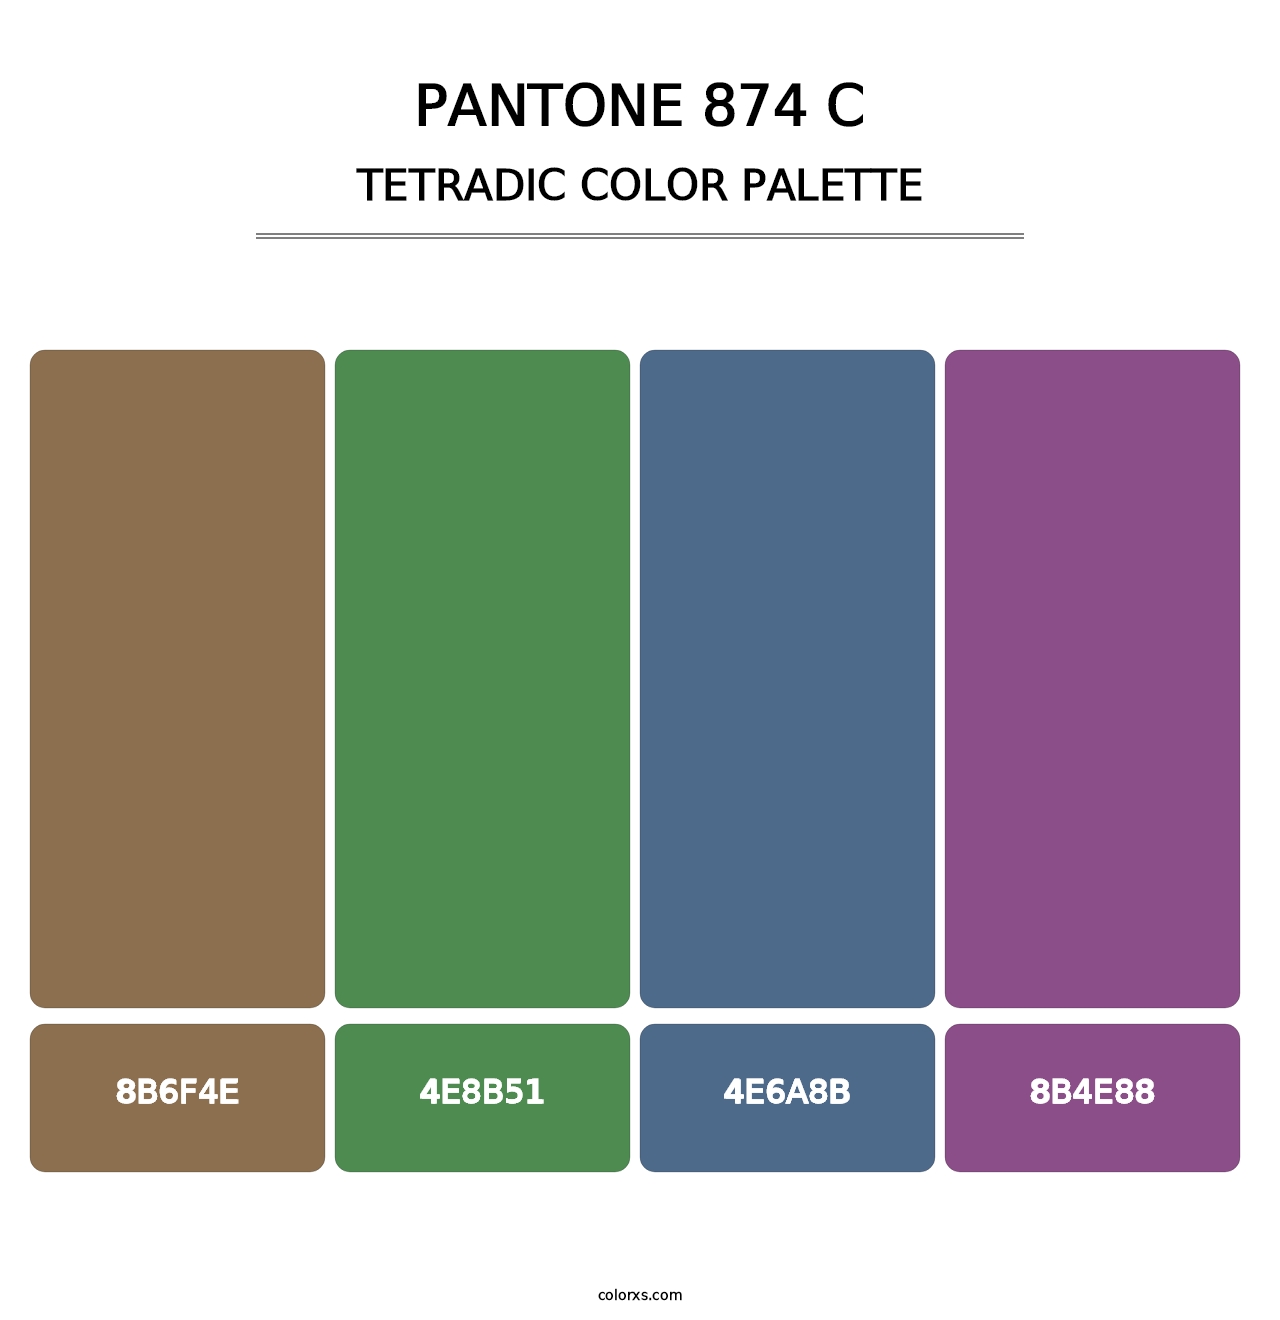 PANTONE 874 C - Tetradic Color Palette